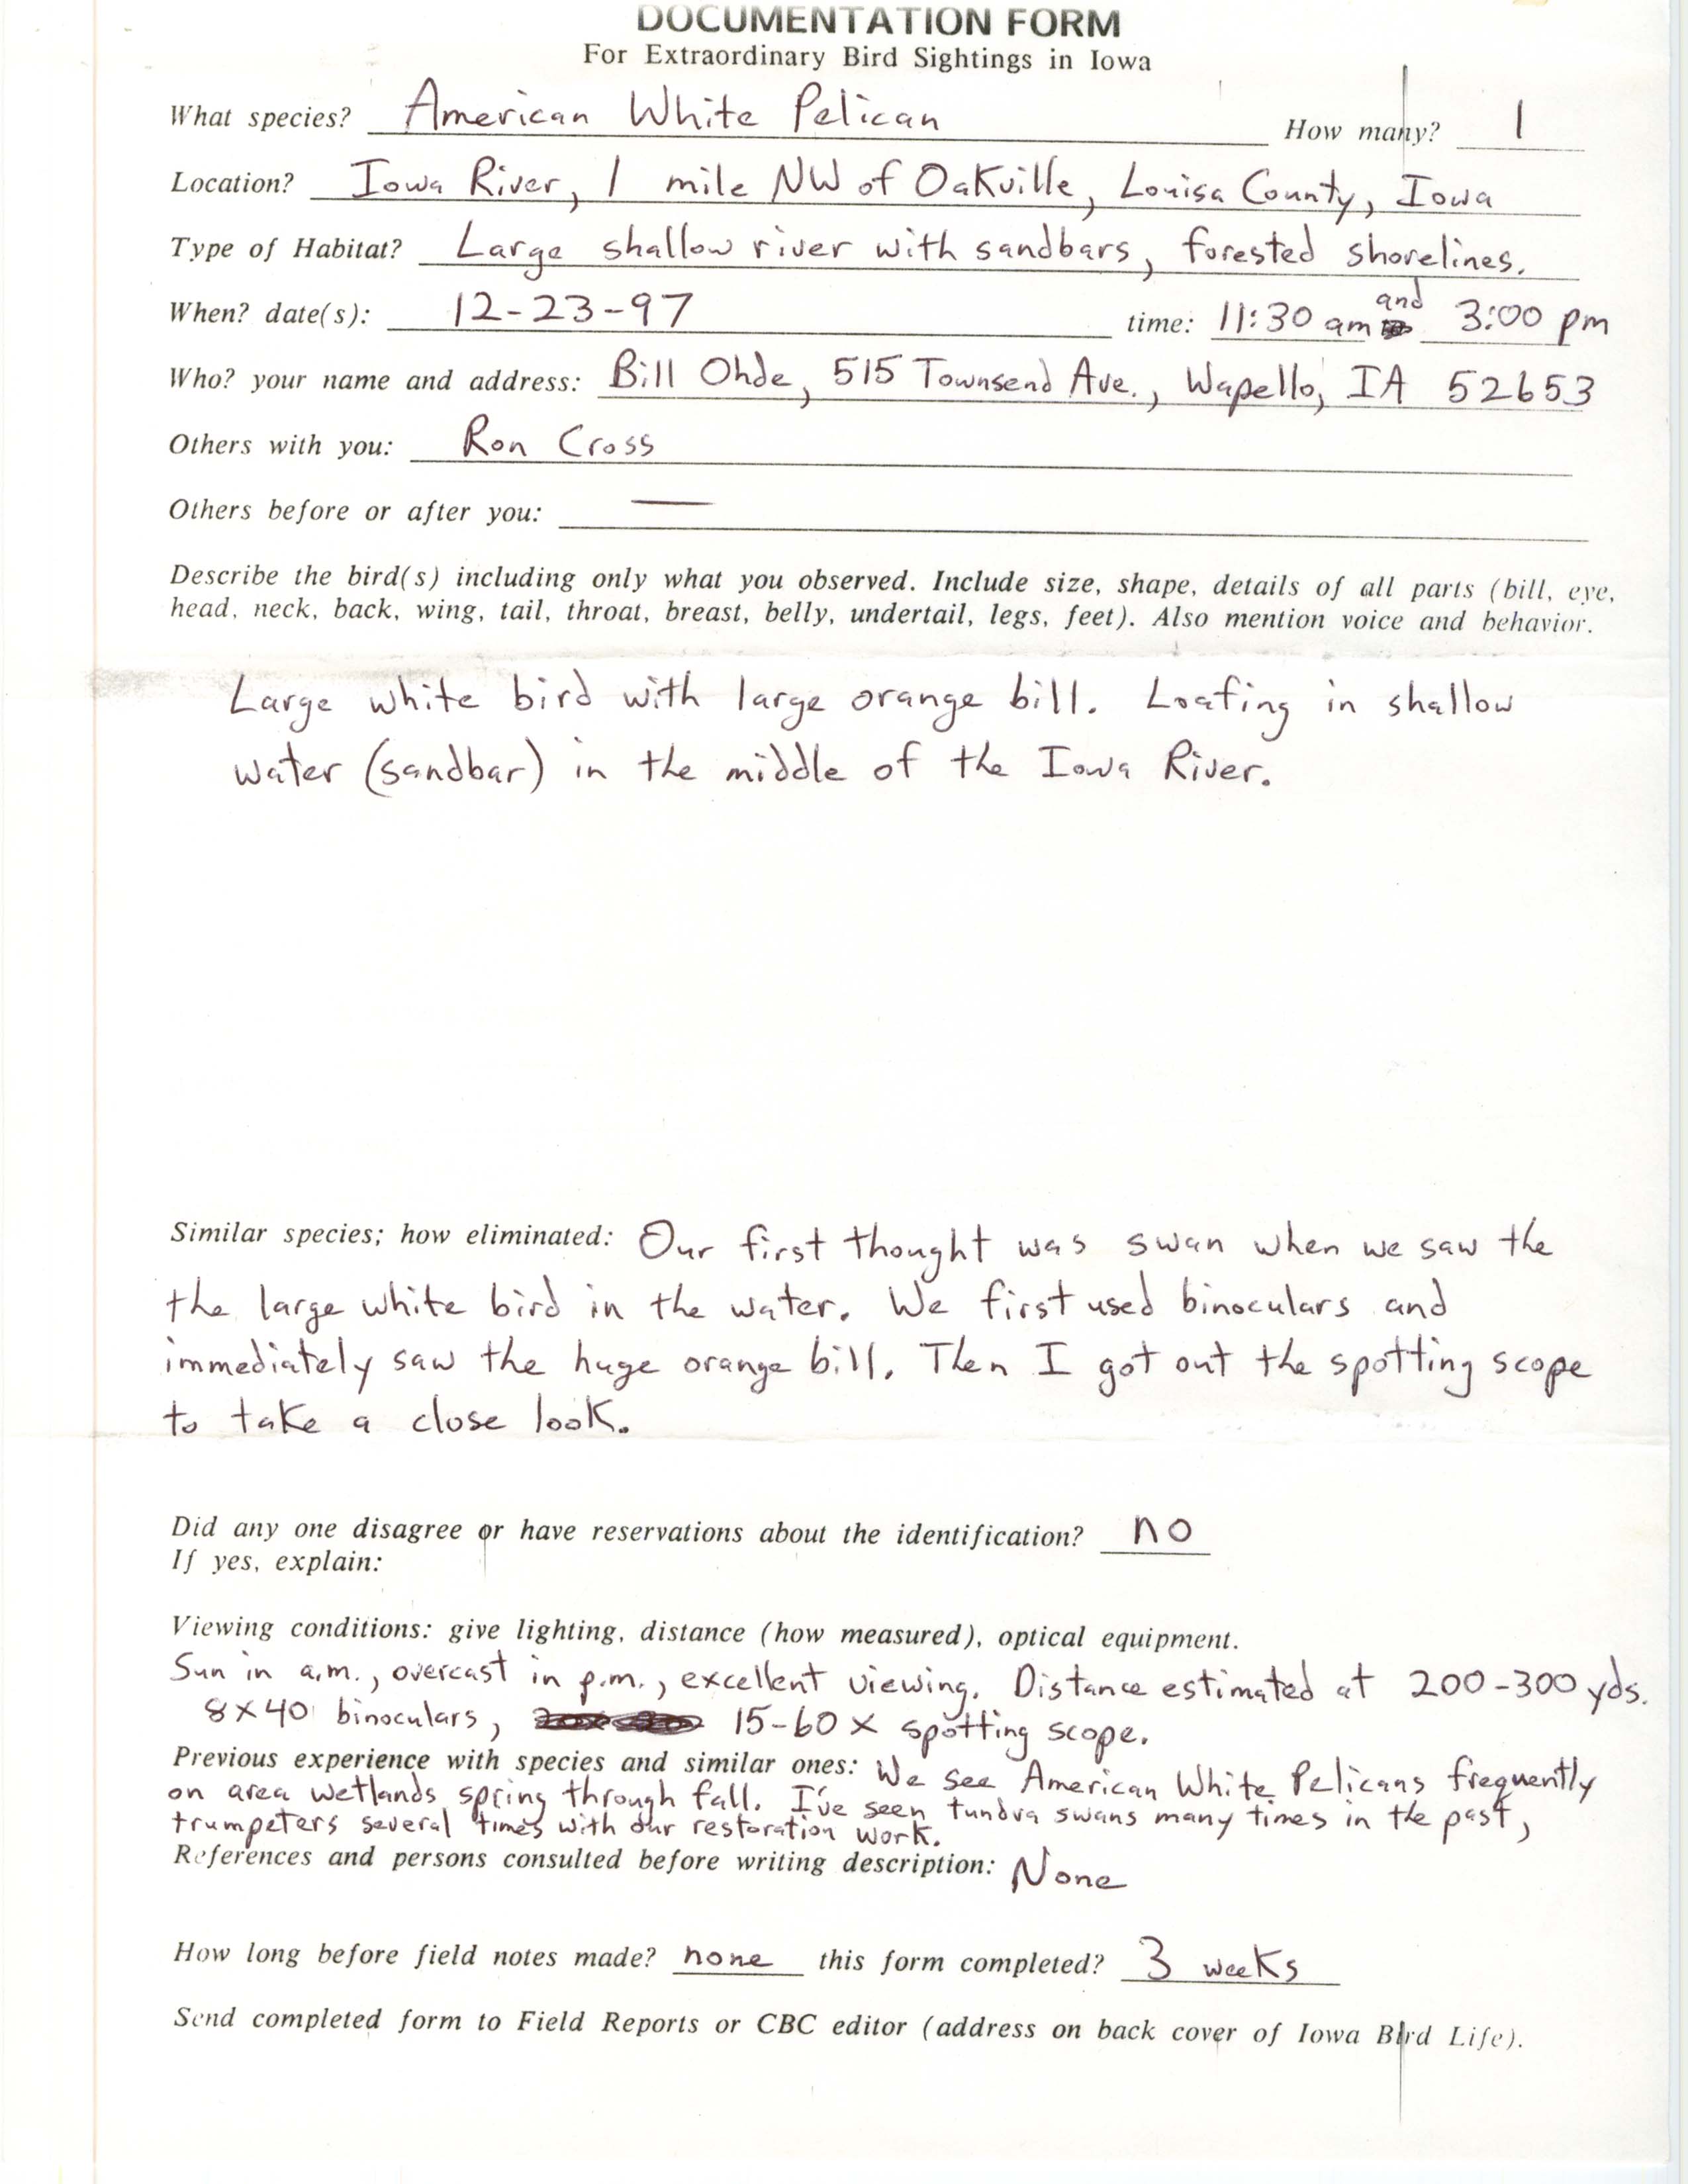 Rare bird documentation form for American White Pelican at Oakville, 1997